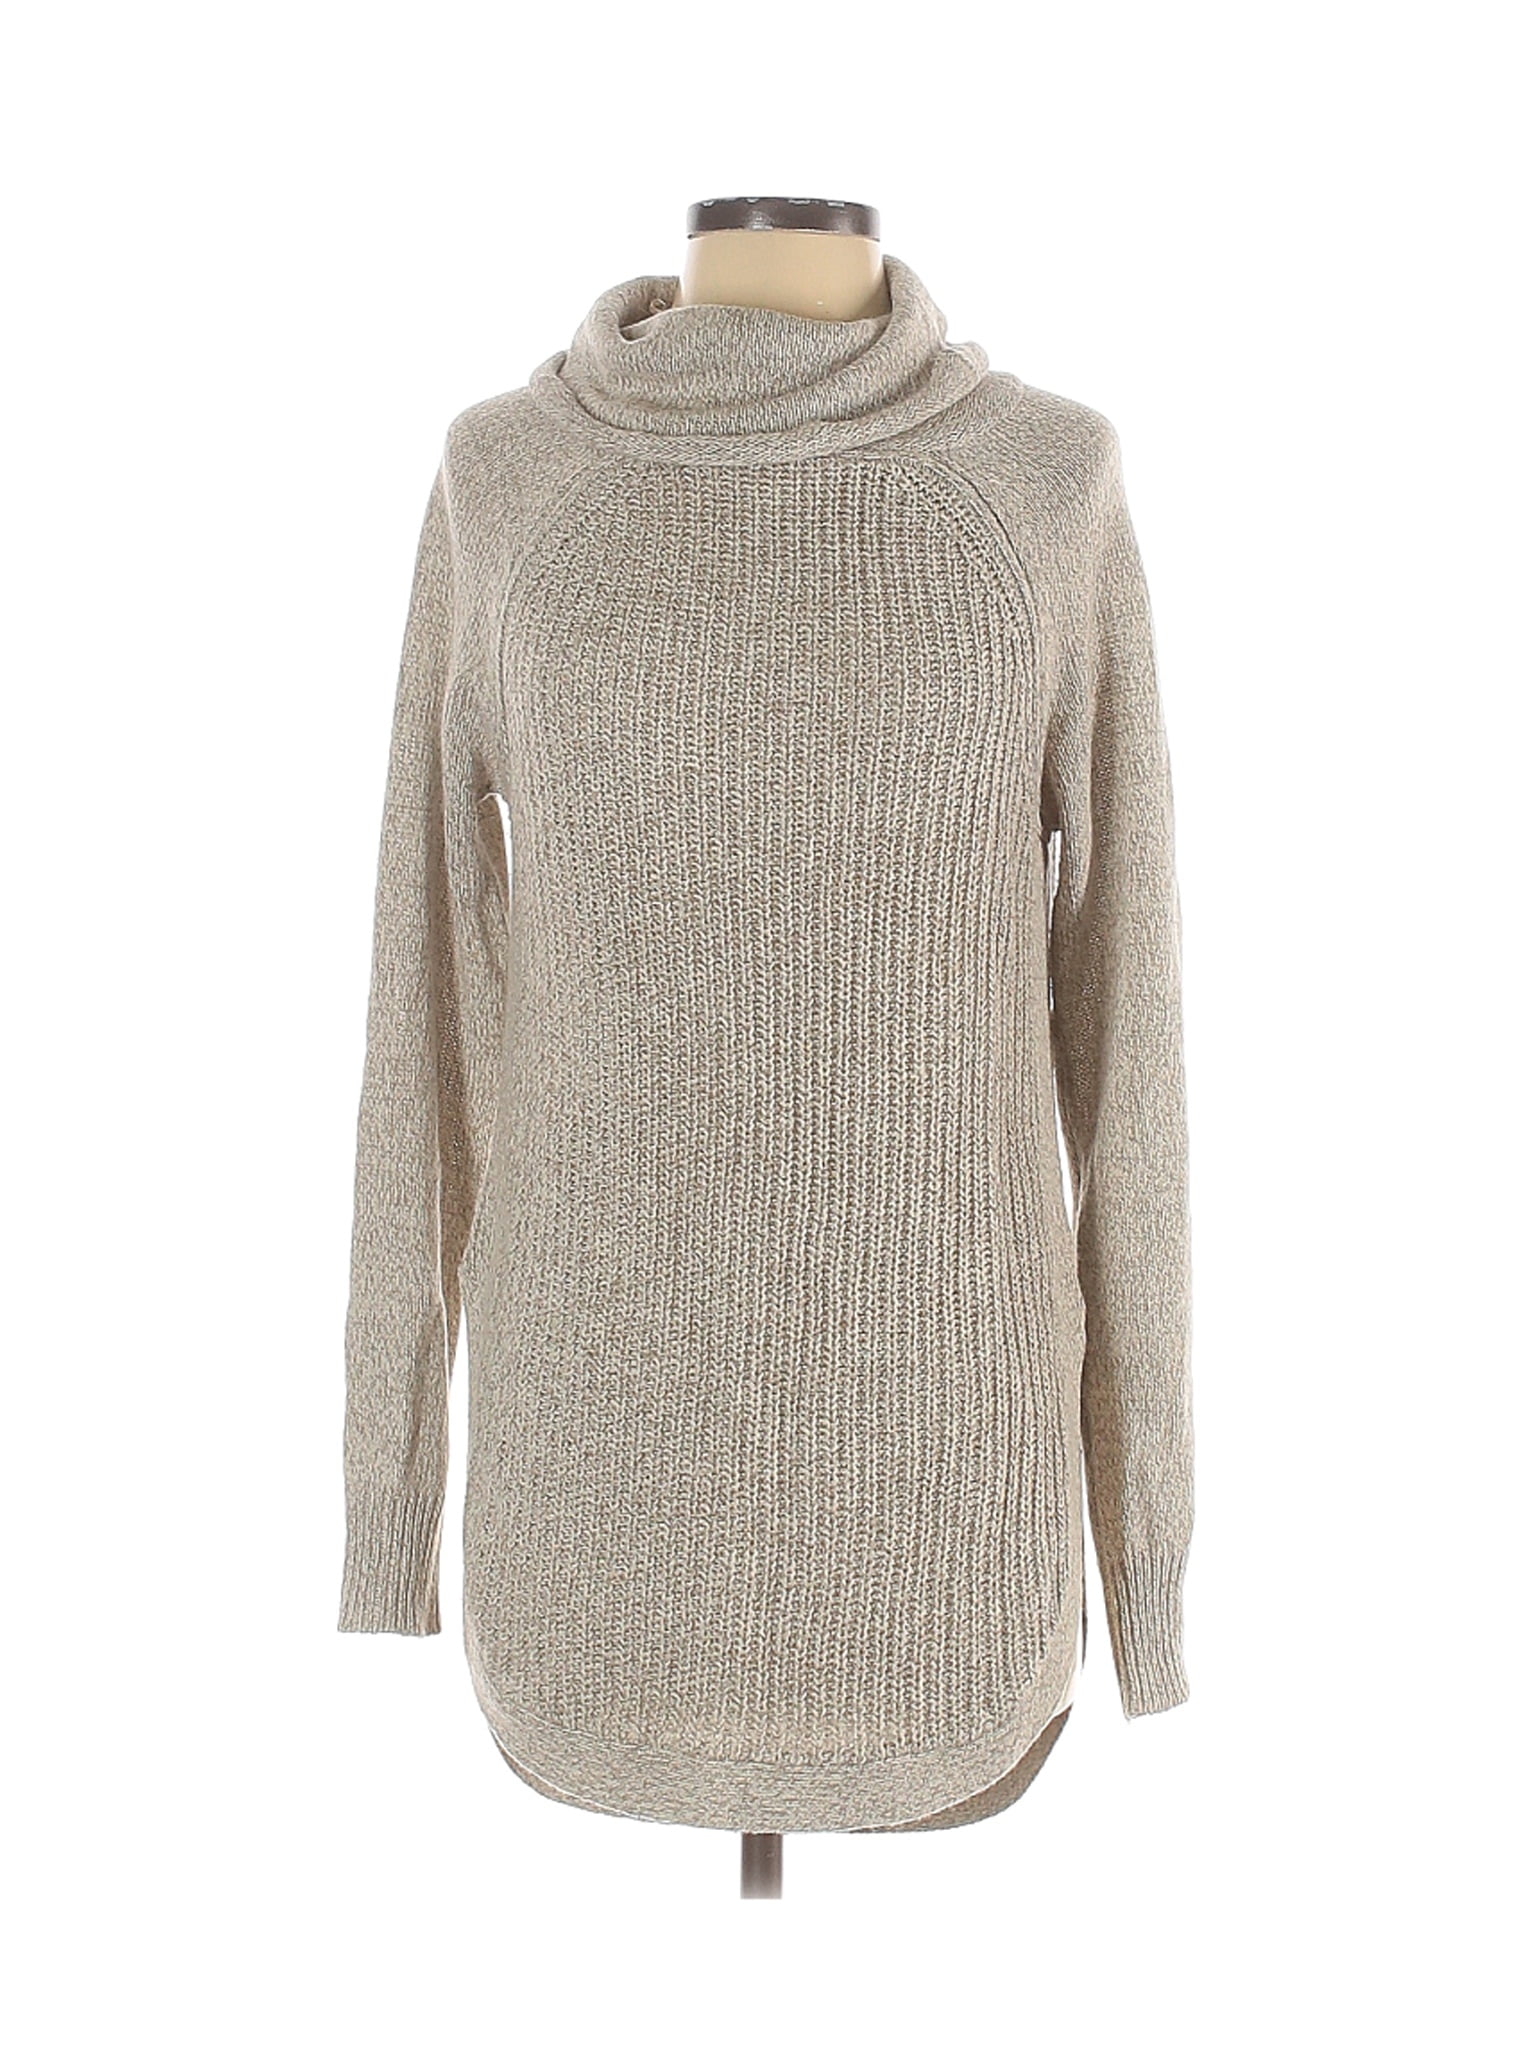 Retrod - Pre-Owned Retrod Women's Size S Pullover Sweater - Walmart.com ...